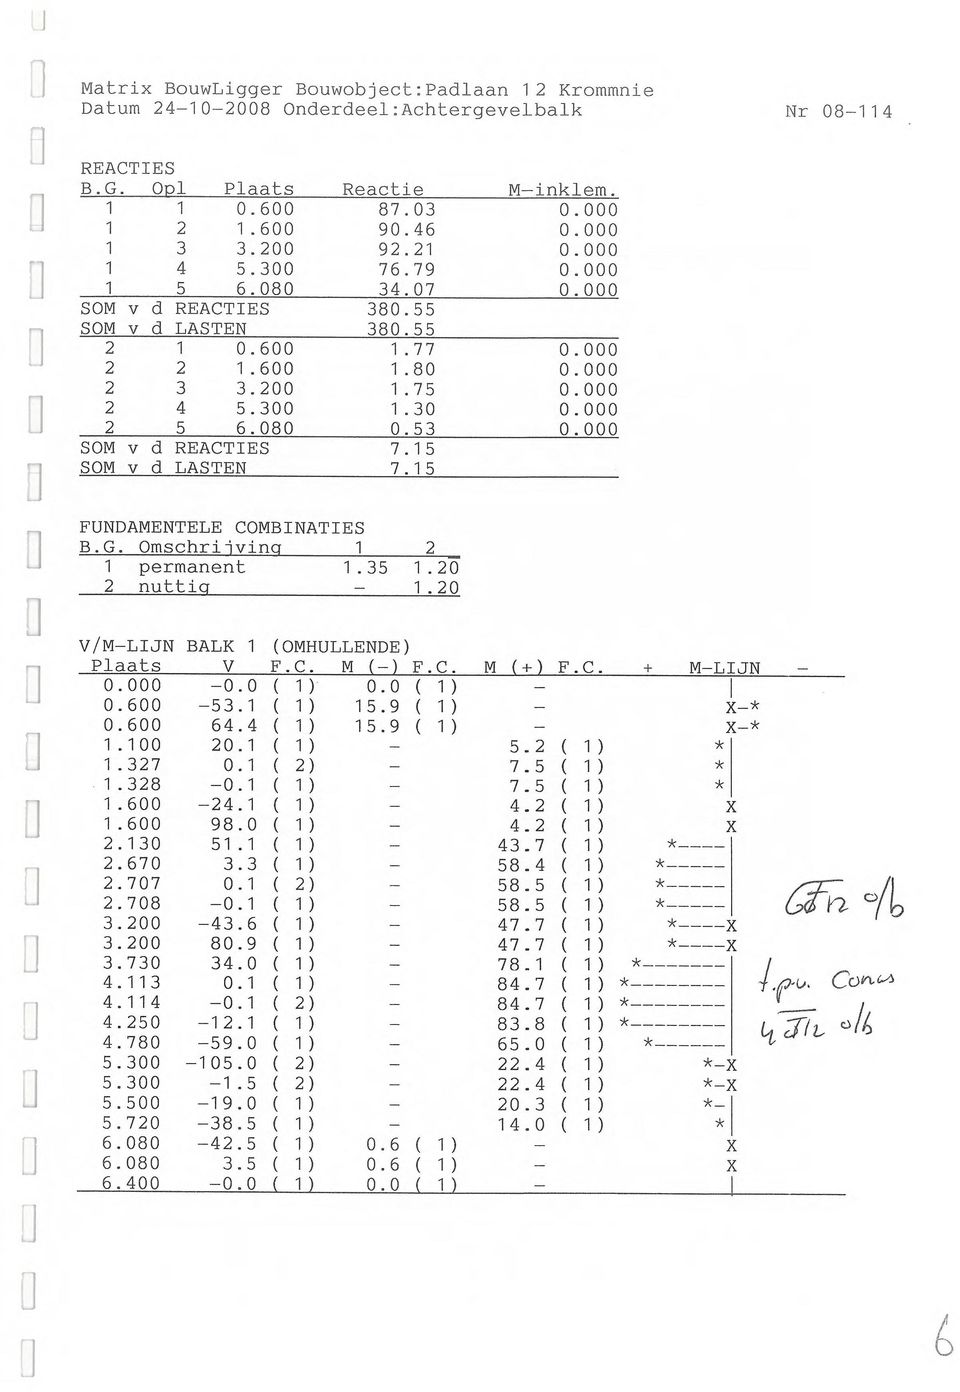 Omschrilving 1 2 1 permanent 1.35 1.27 2 nuttig 1.2 V/MLIJN BALK 1 (MHULLENDE) Plaats V F.C. M () F.C. M (+) F.C... ( 1). ( 1).6 53.1 ( 1) 15.9 ( 1).6 64.4 ( 1) 15.9 ( 1) 1.1 2.1 ( 1) 5.2 ( 1) 1.327.